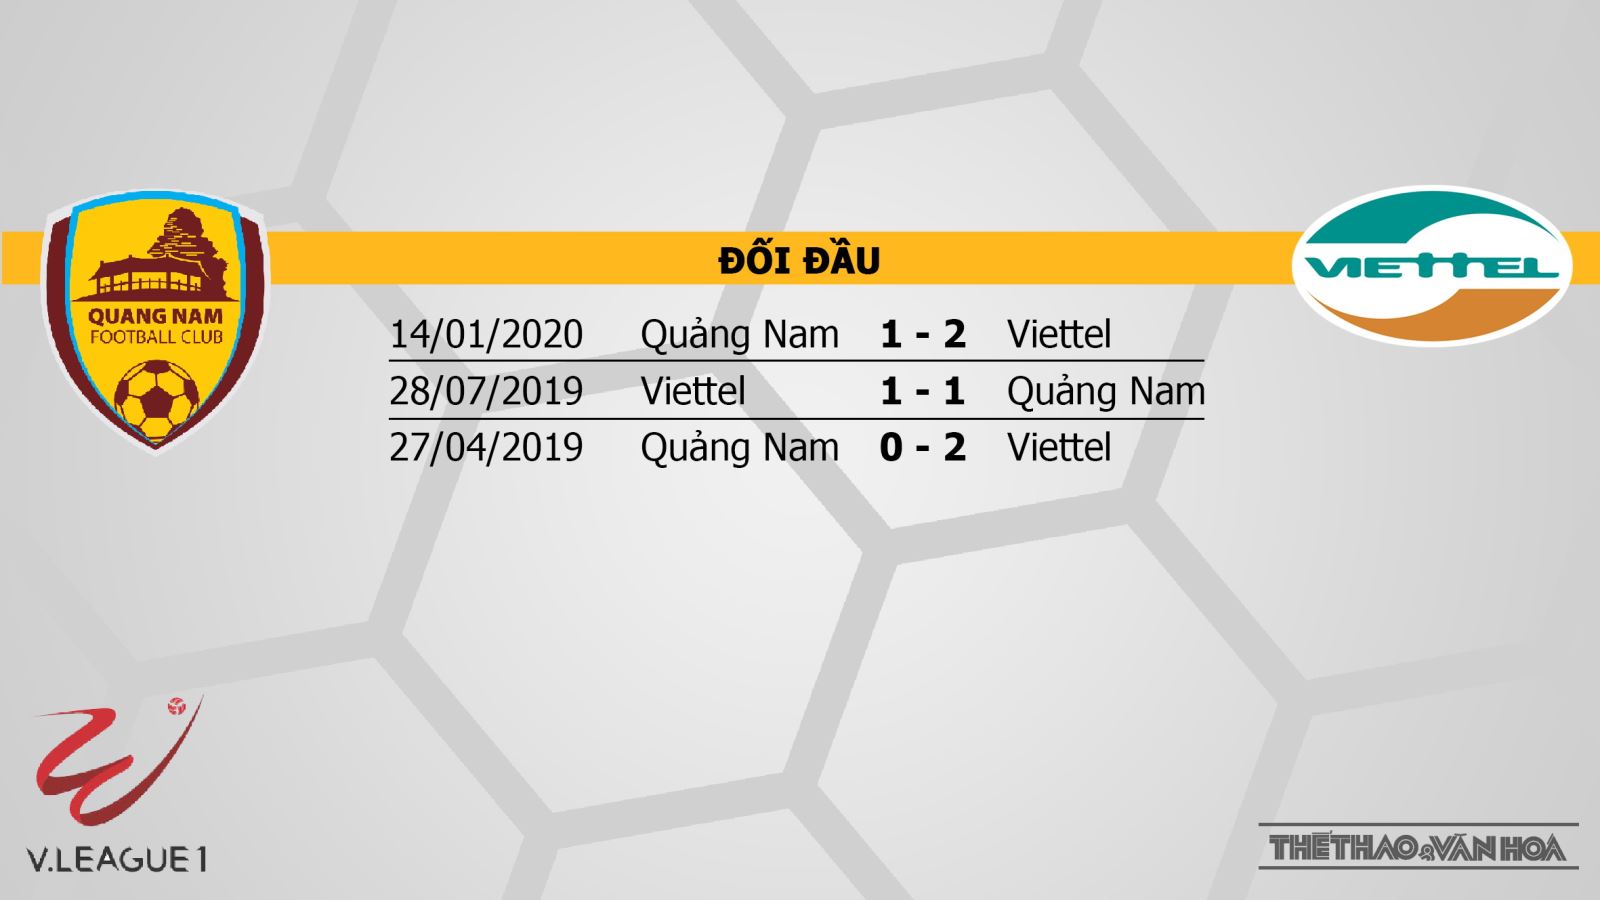 Quảng Nam vs Viettel, Quảng Nam, Viettel, trực tiếp bóng đá, bóng đá, bóng đá hôm nay, trực tiếp Quảng Nam vs Viettel, V-League